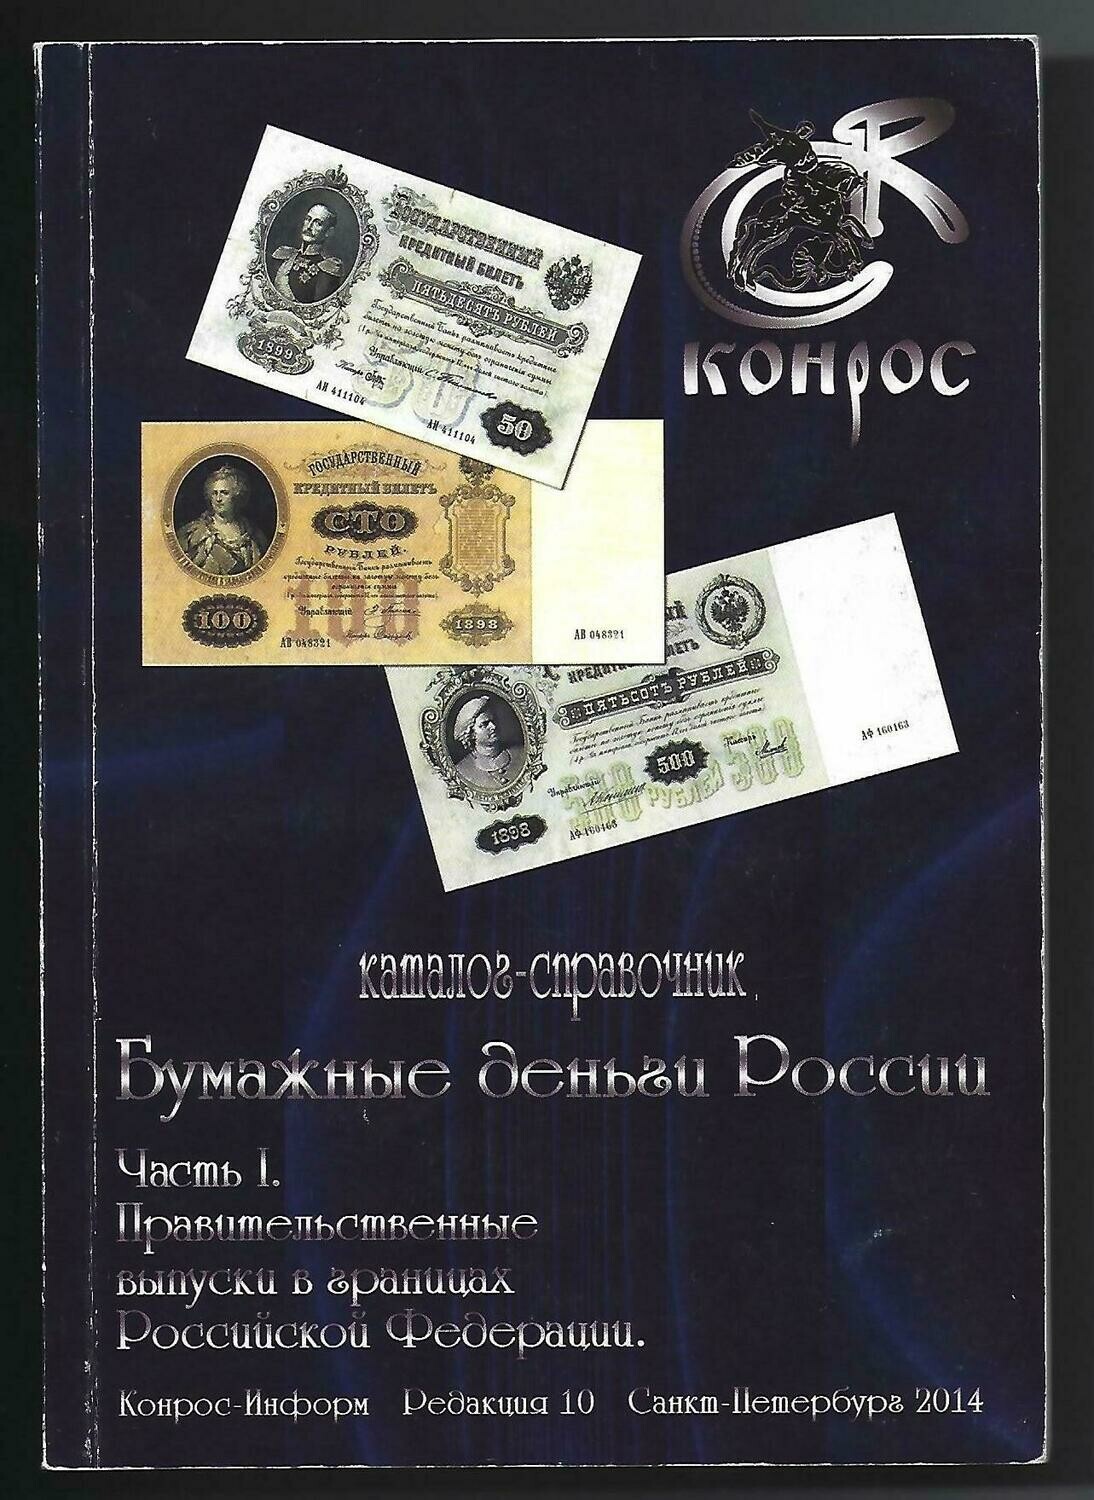 World; V.E. Semenov, "Catalogue of Russian Paper Money, part 1."